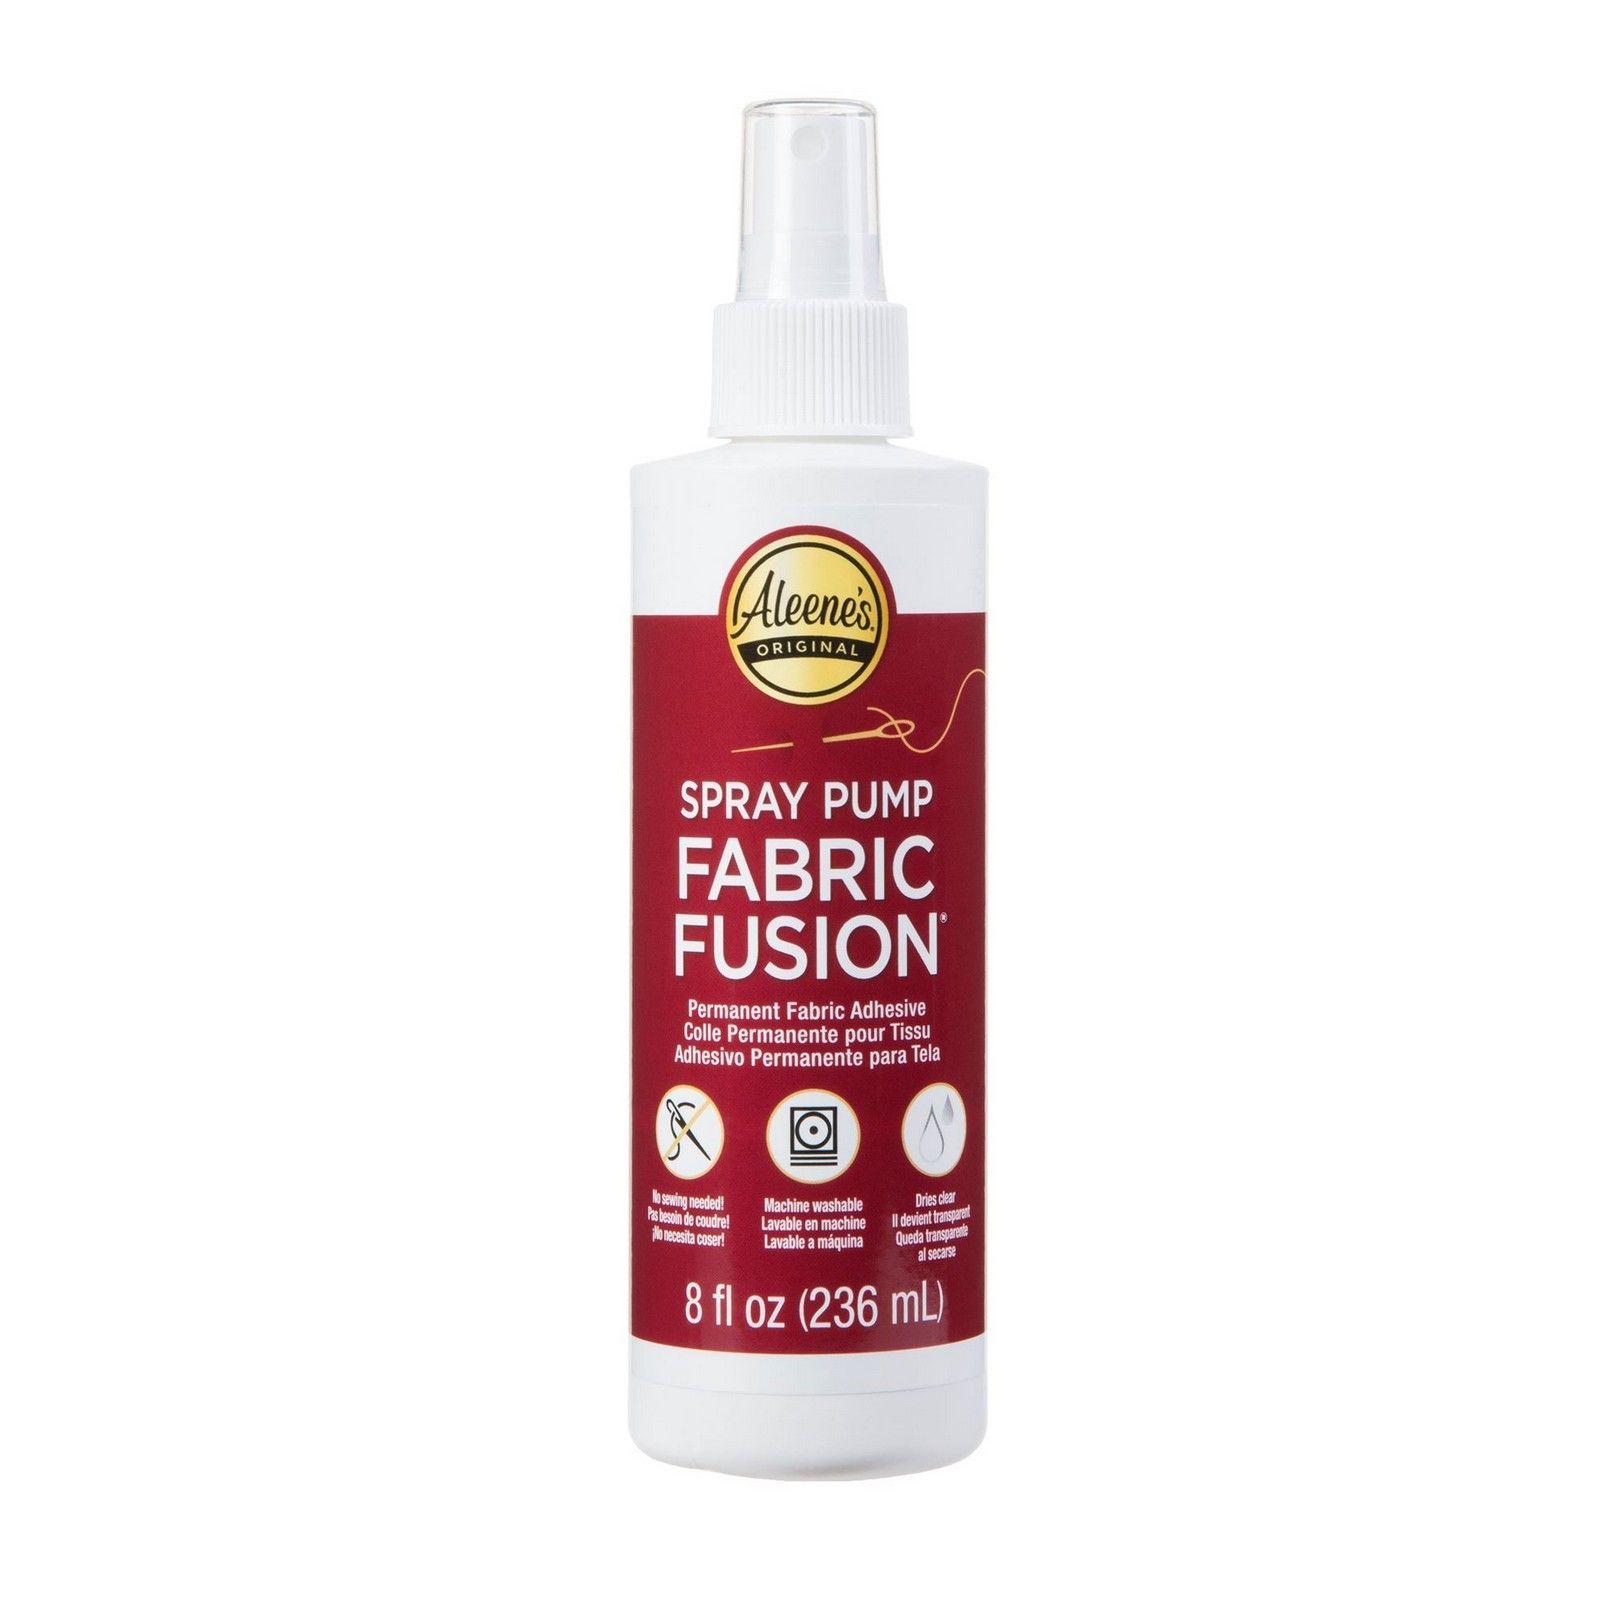 Aleene's • Fabric fusion glue spray pump 236ml